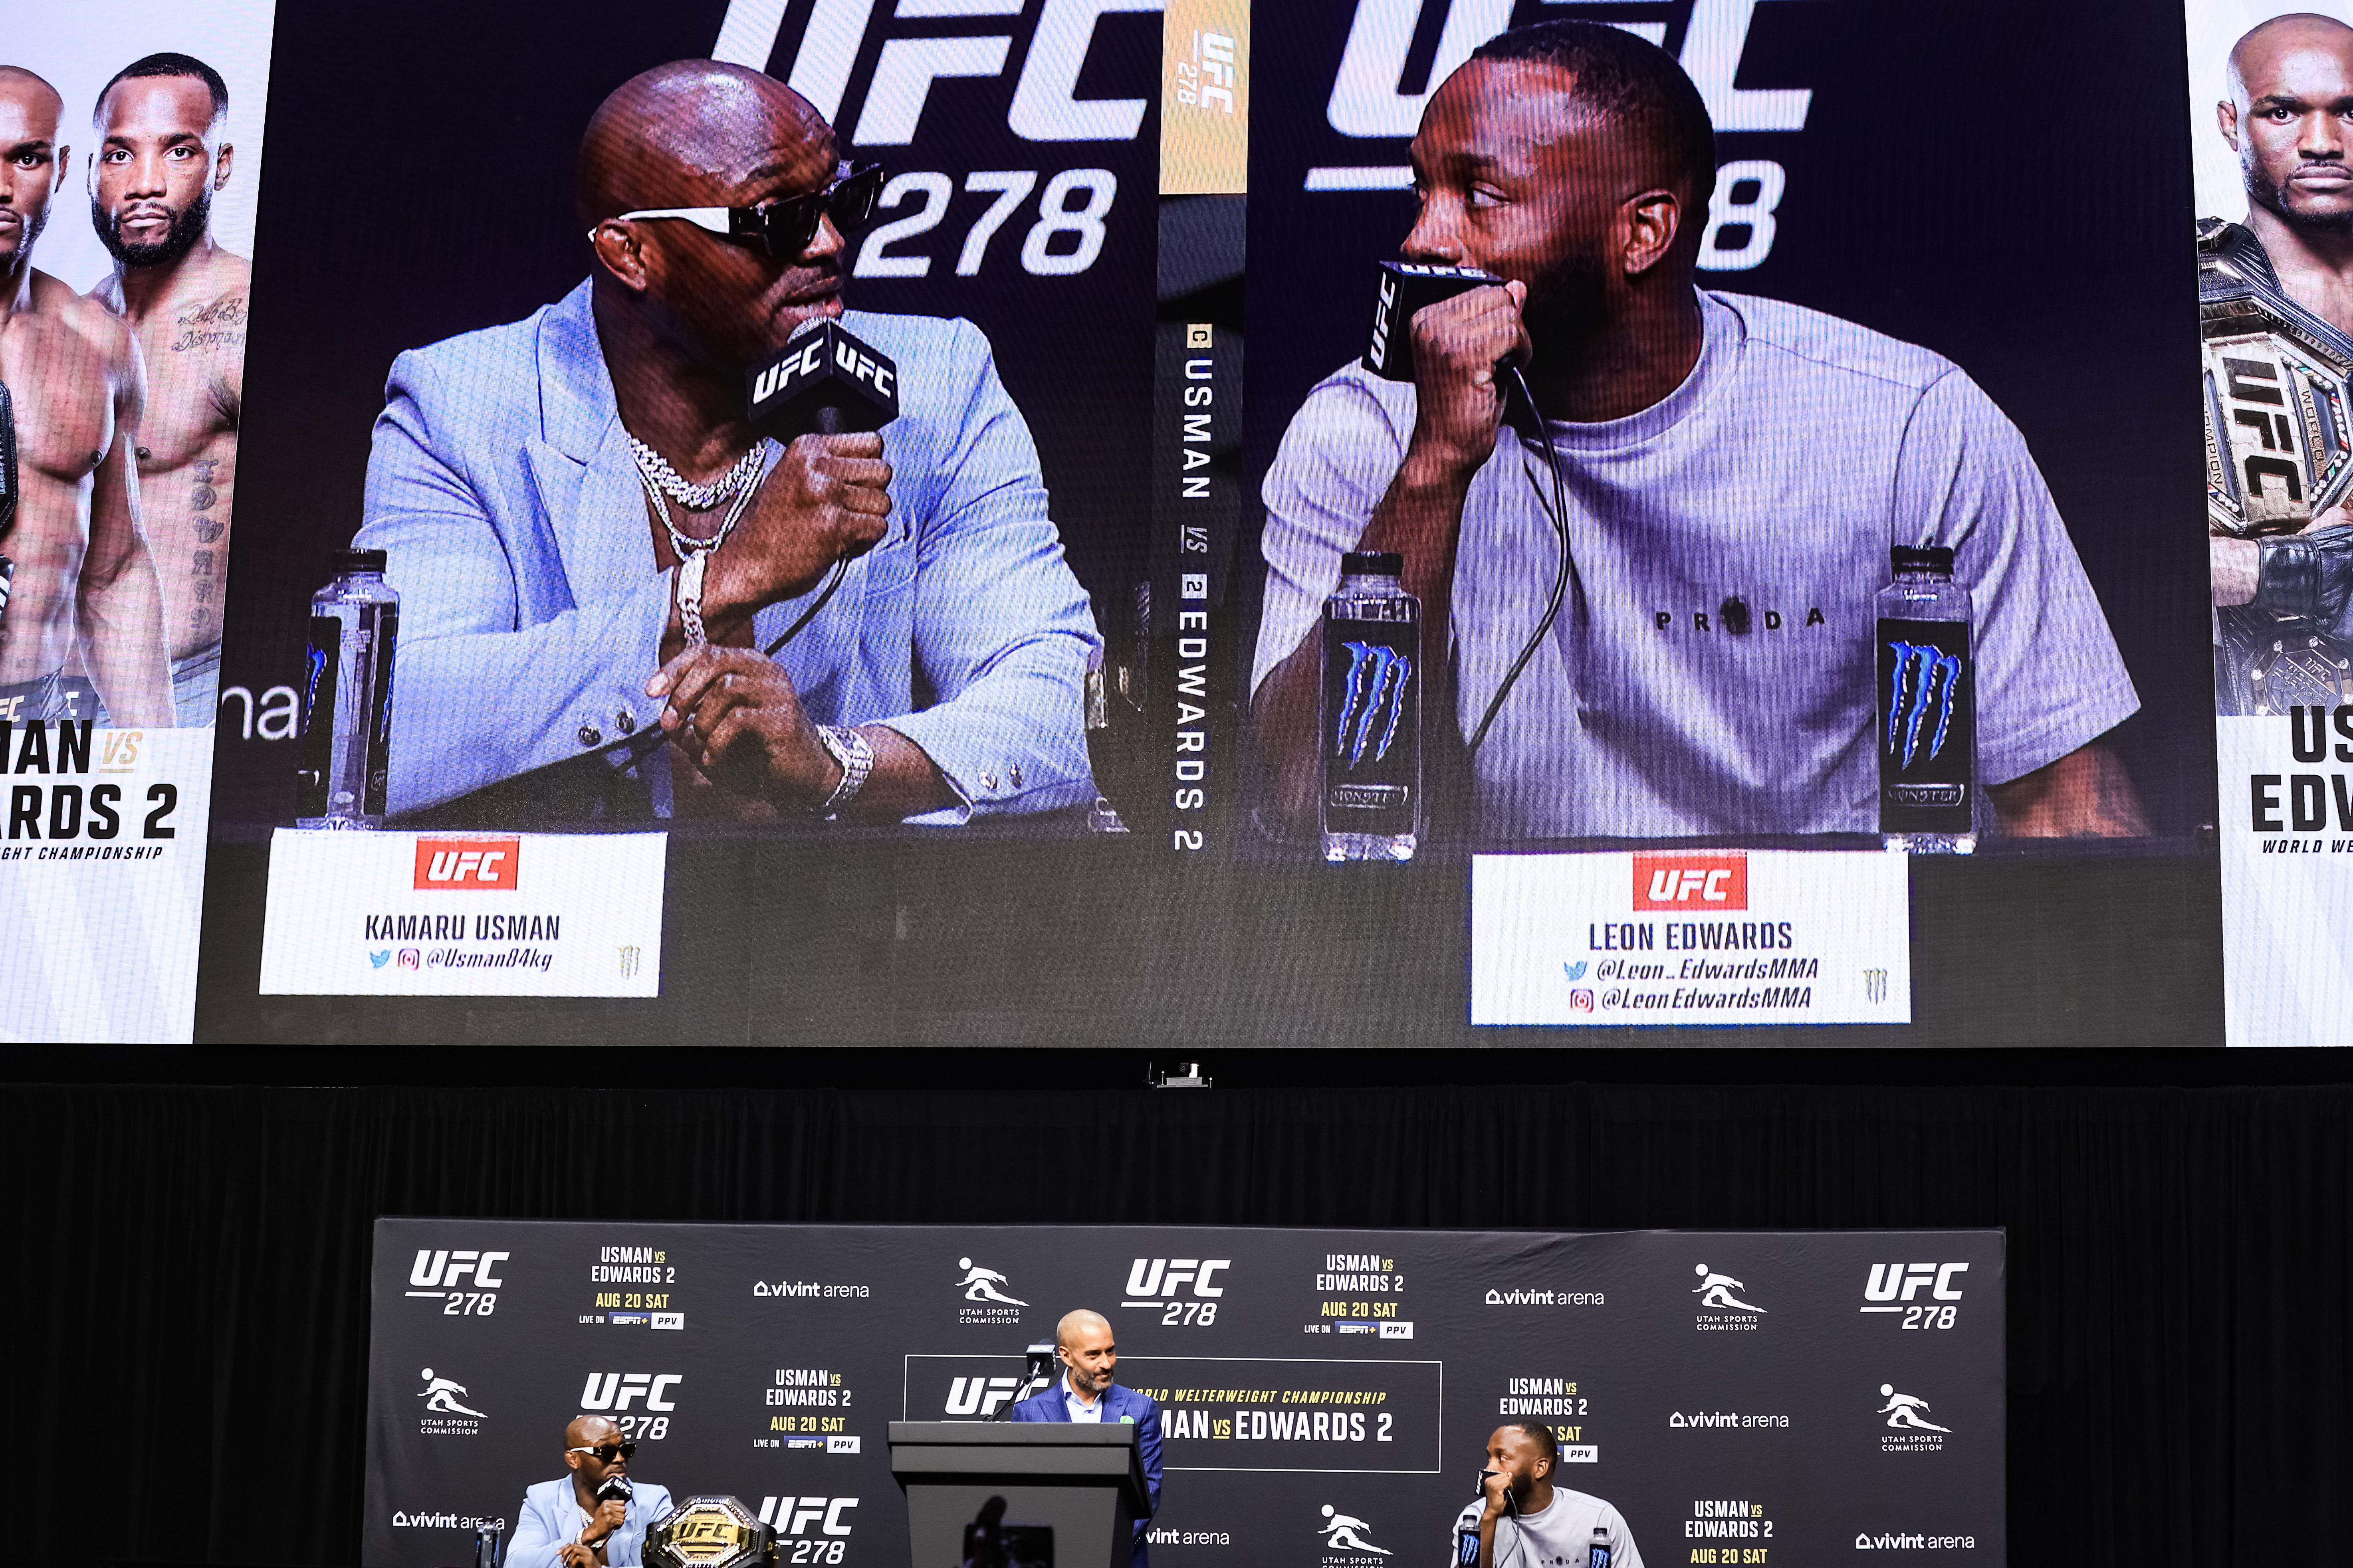 Kamaru Usman talks with Leon Edwards at the UFC 278 press conference.